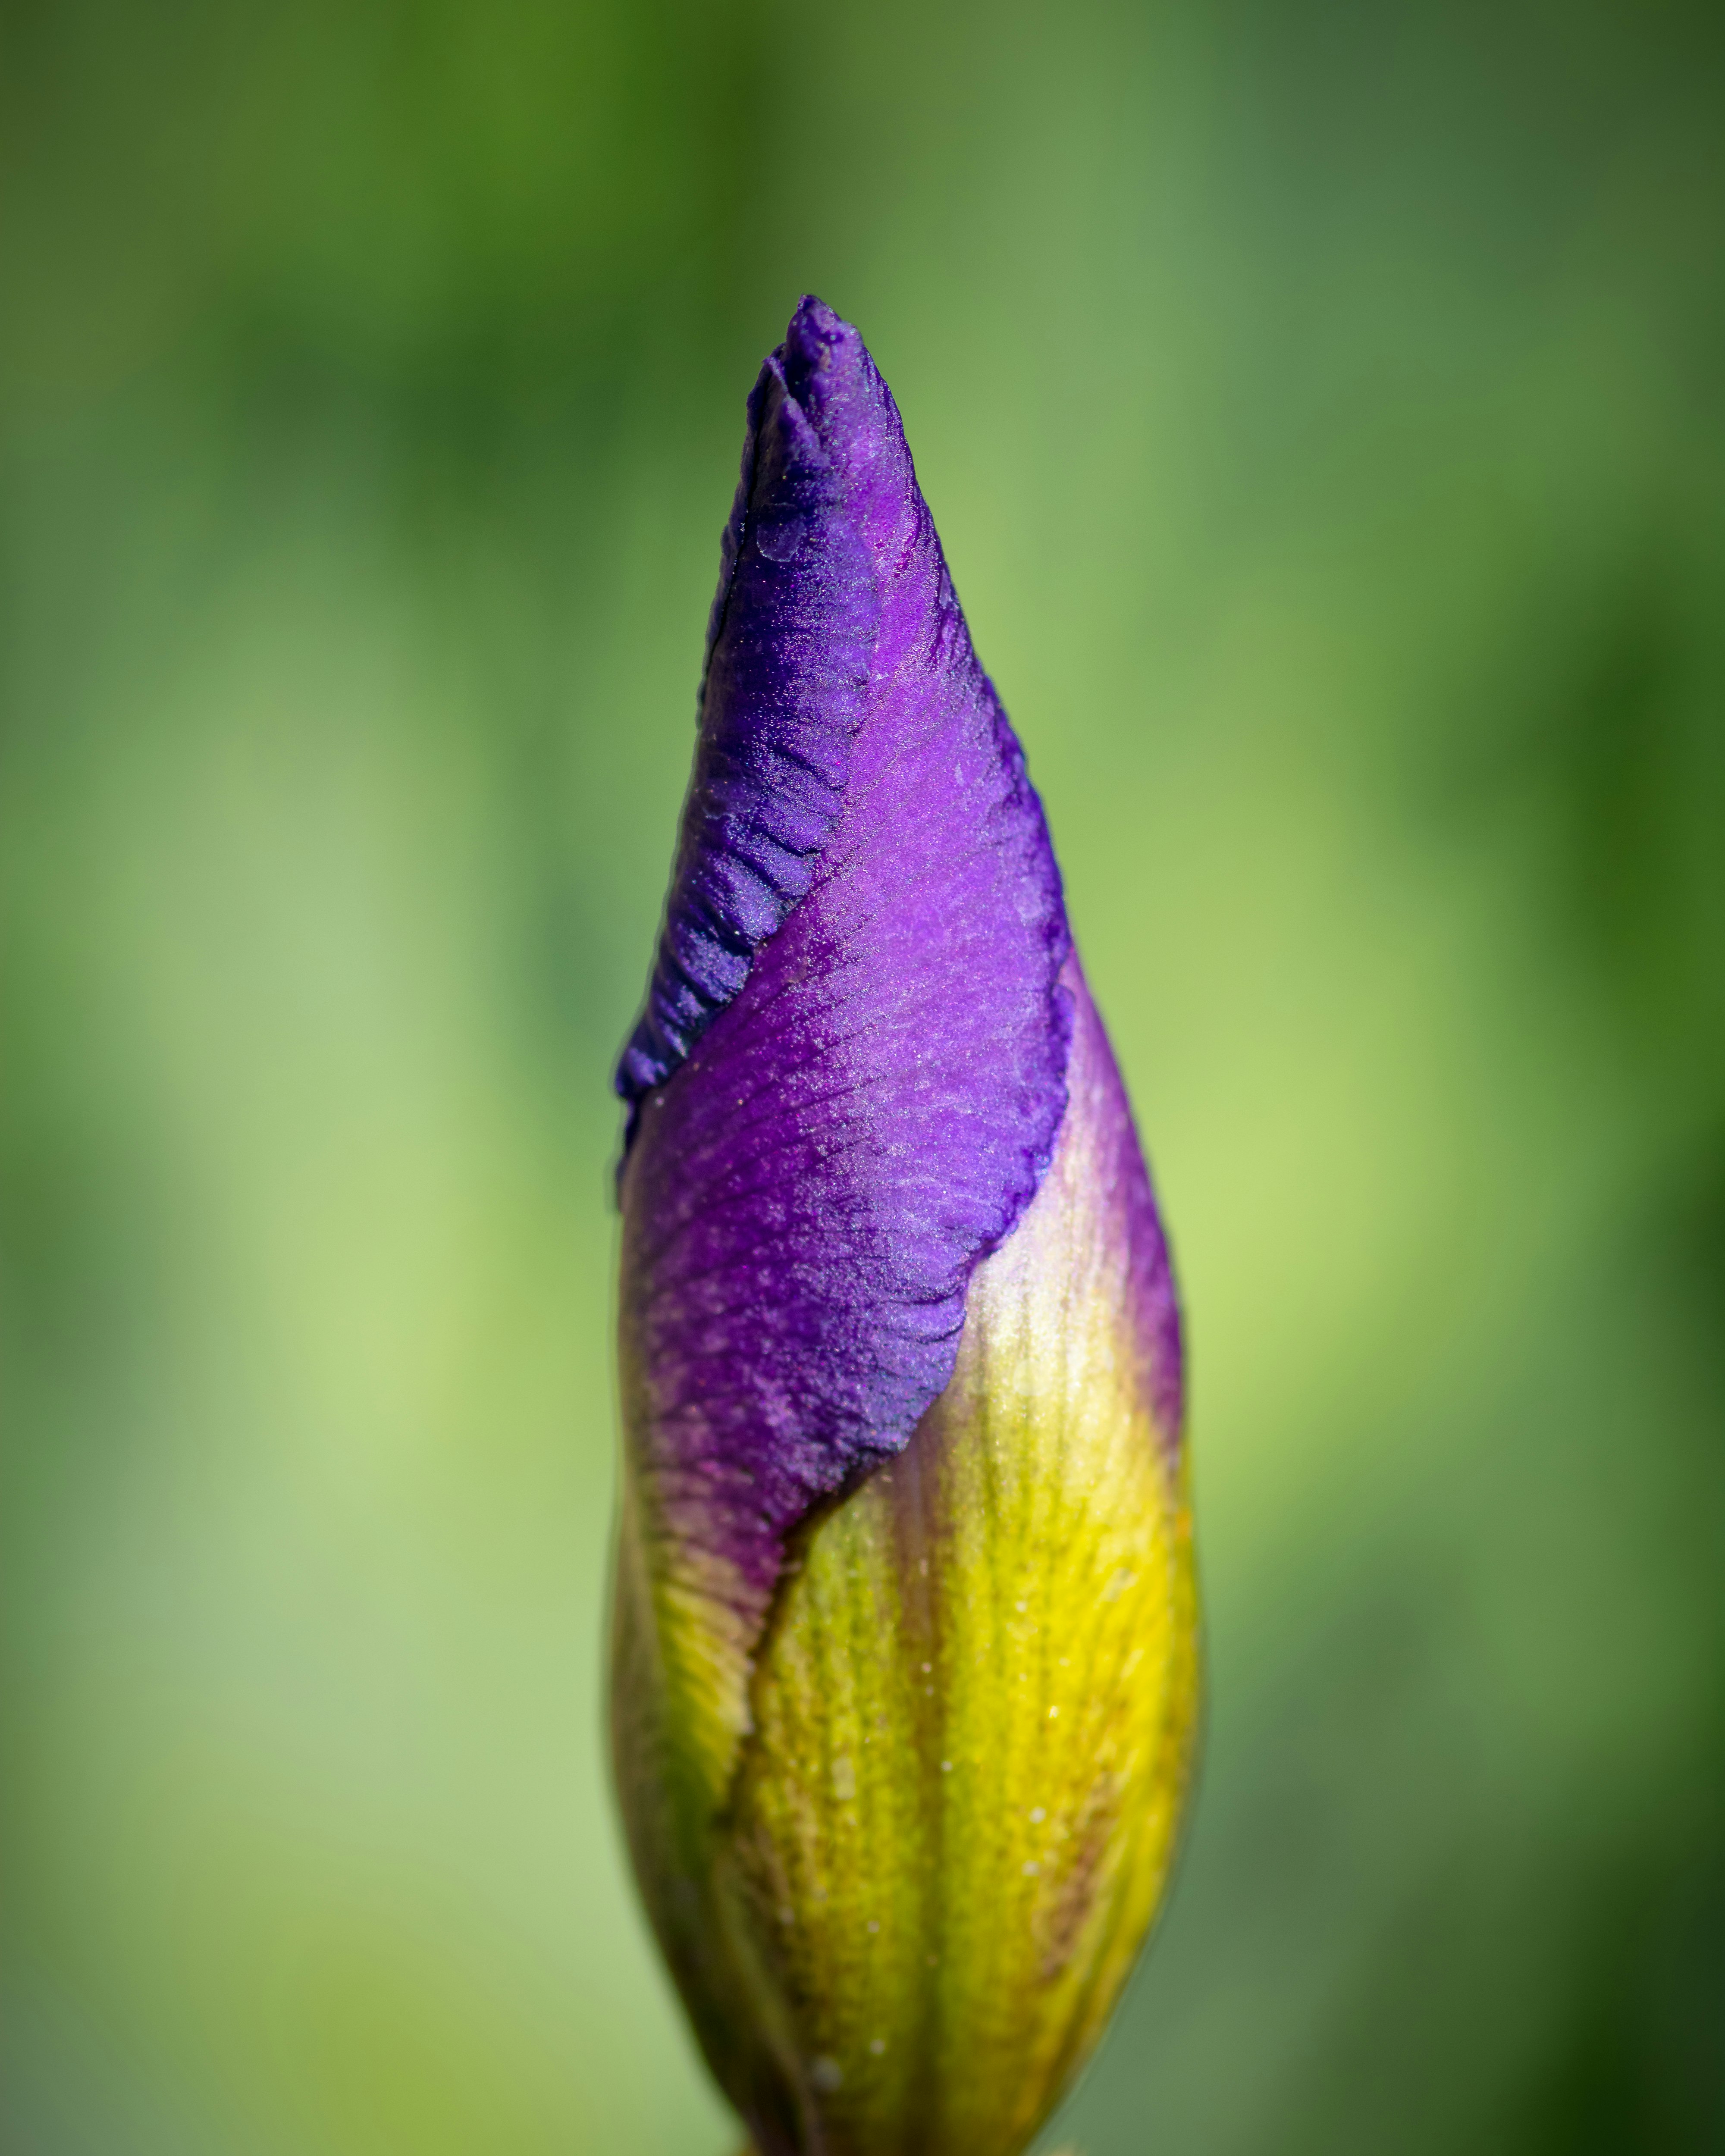 Purple And Green Flower Bud Photo Free Blossom Image On Unsplash